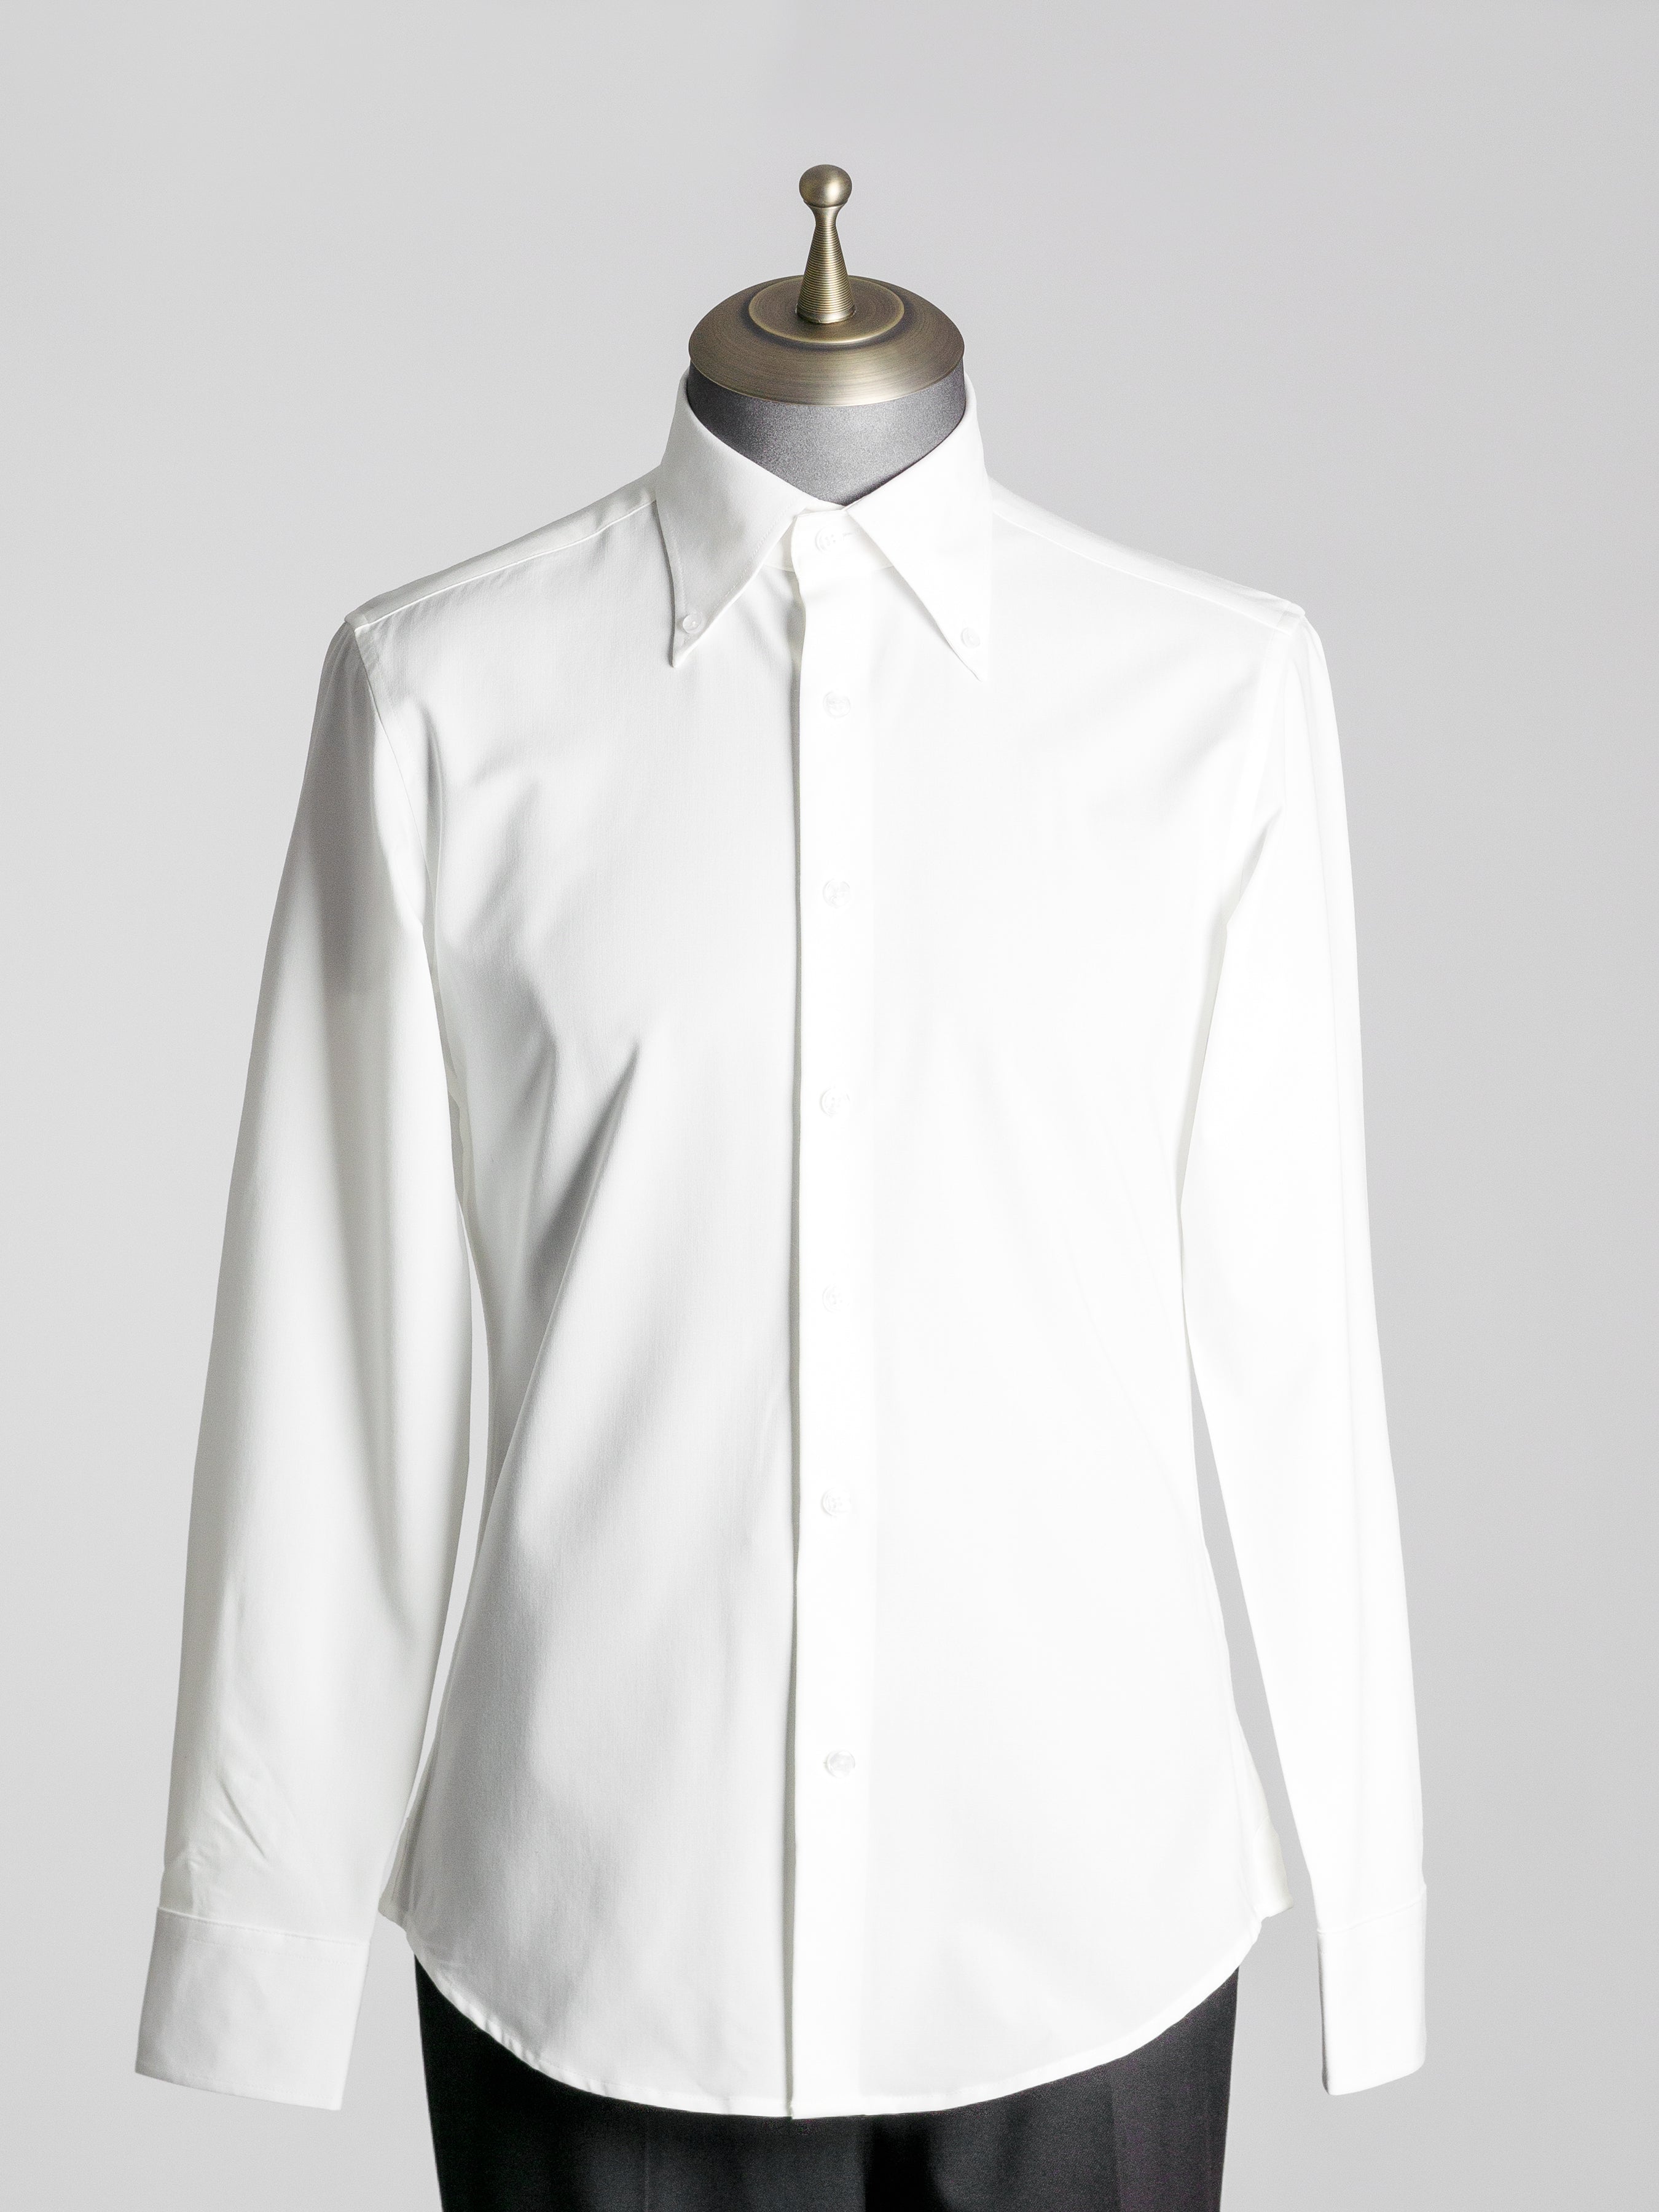 Elio Formal Shirt - White Button-Down Collar